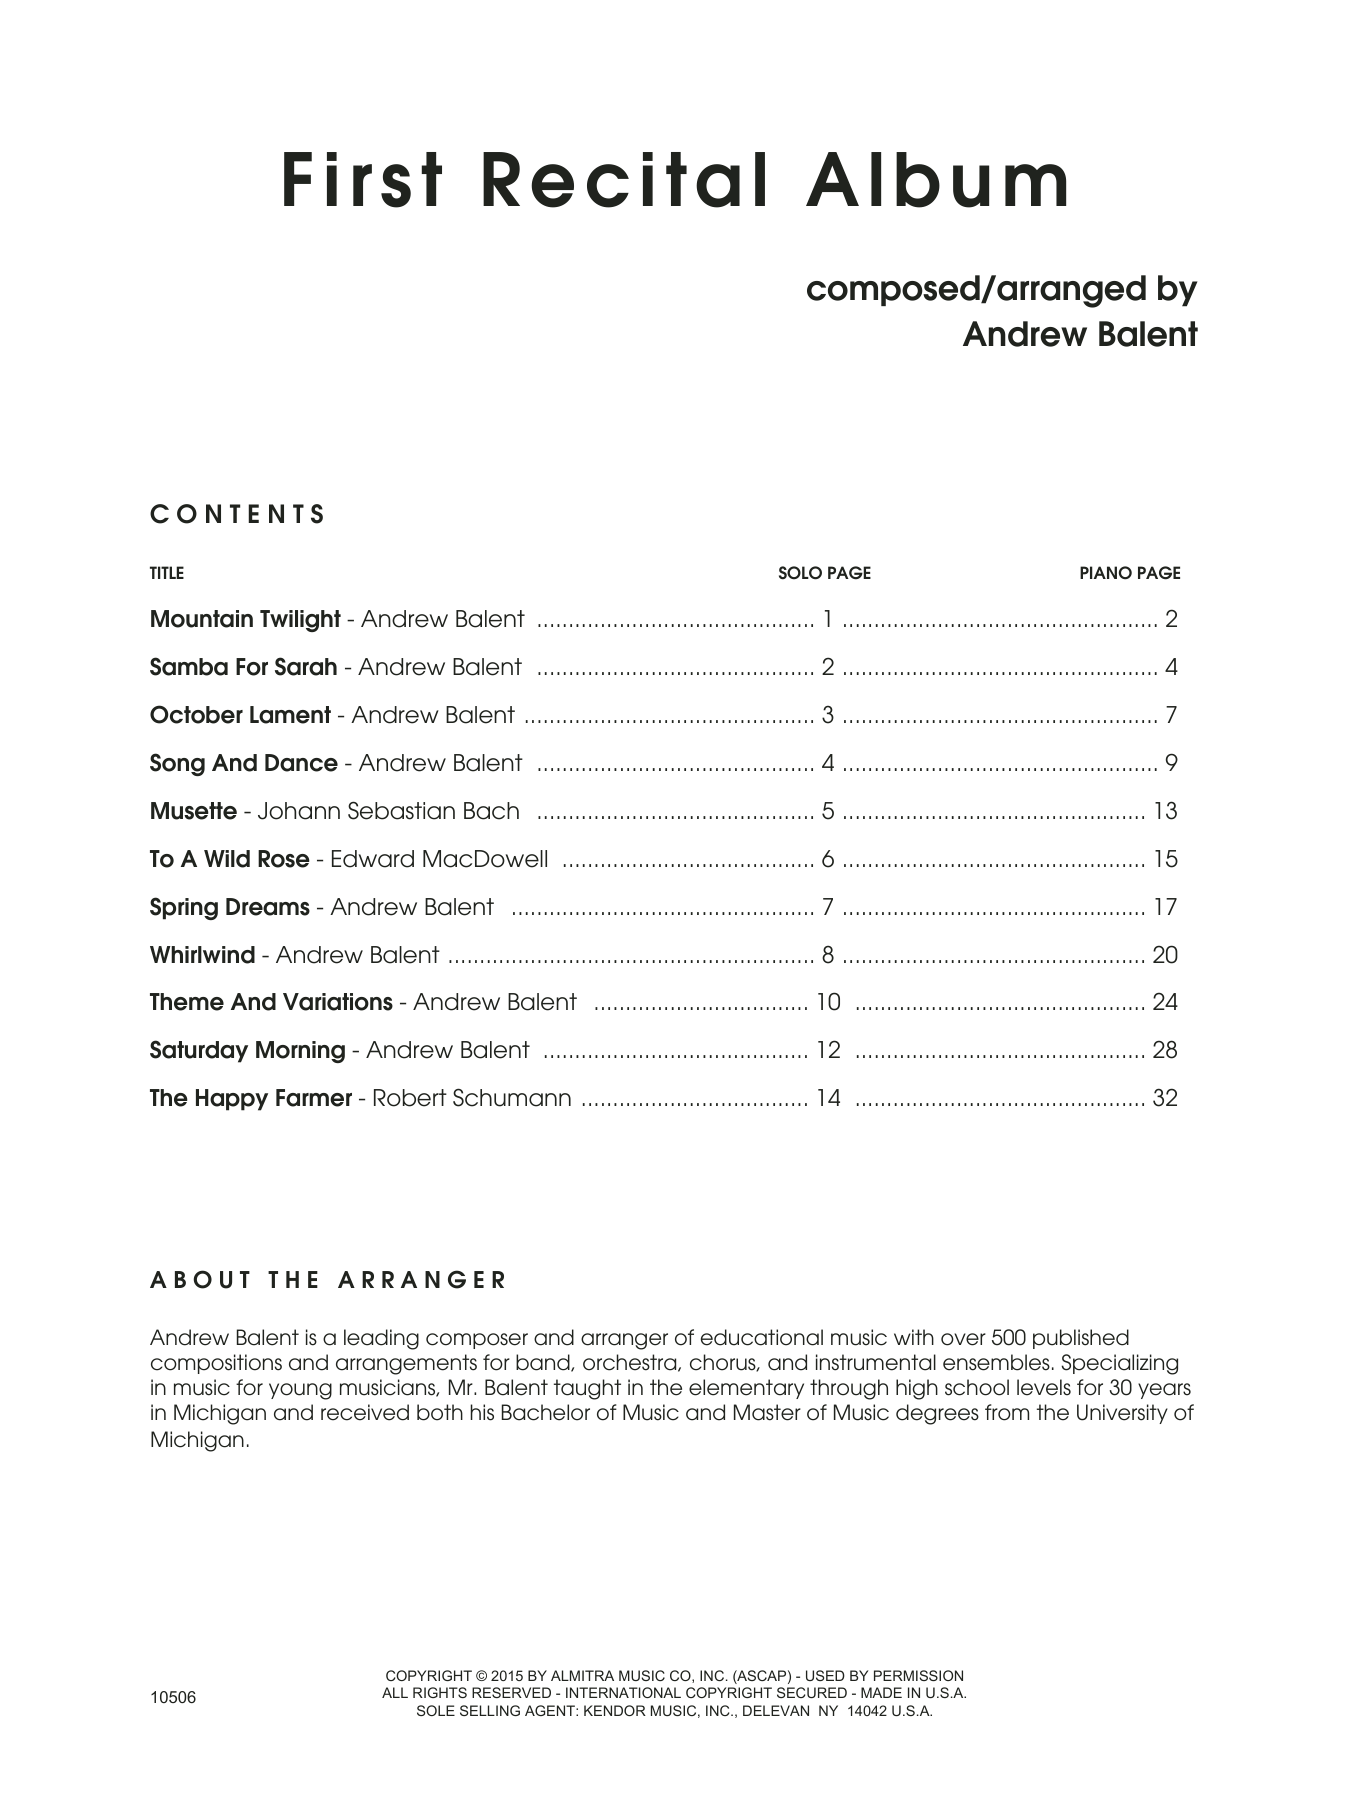 Download Andrew Balent First Recital Album - Piano Sheet Music